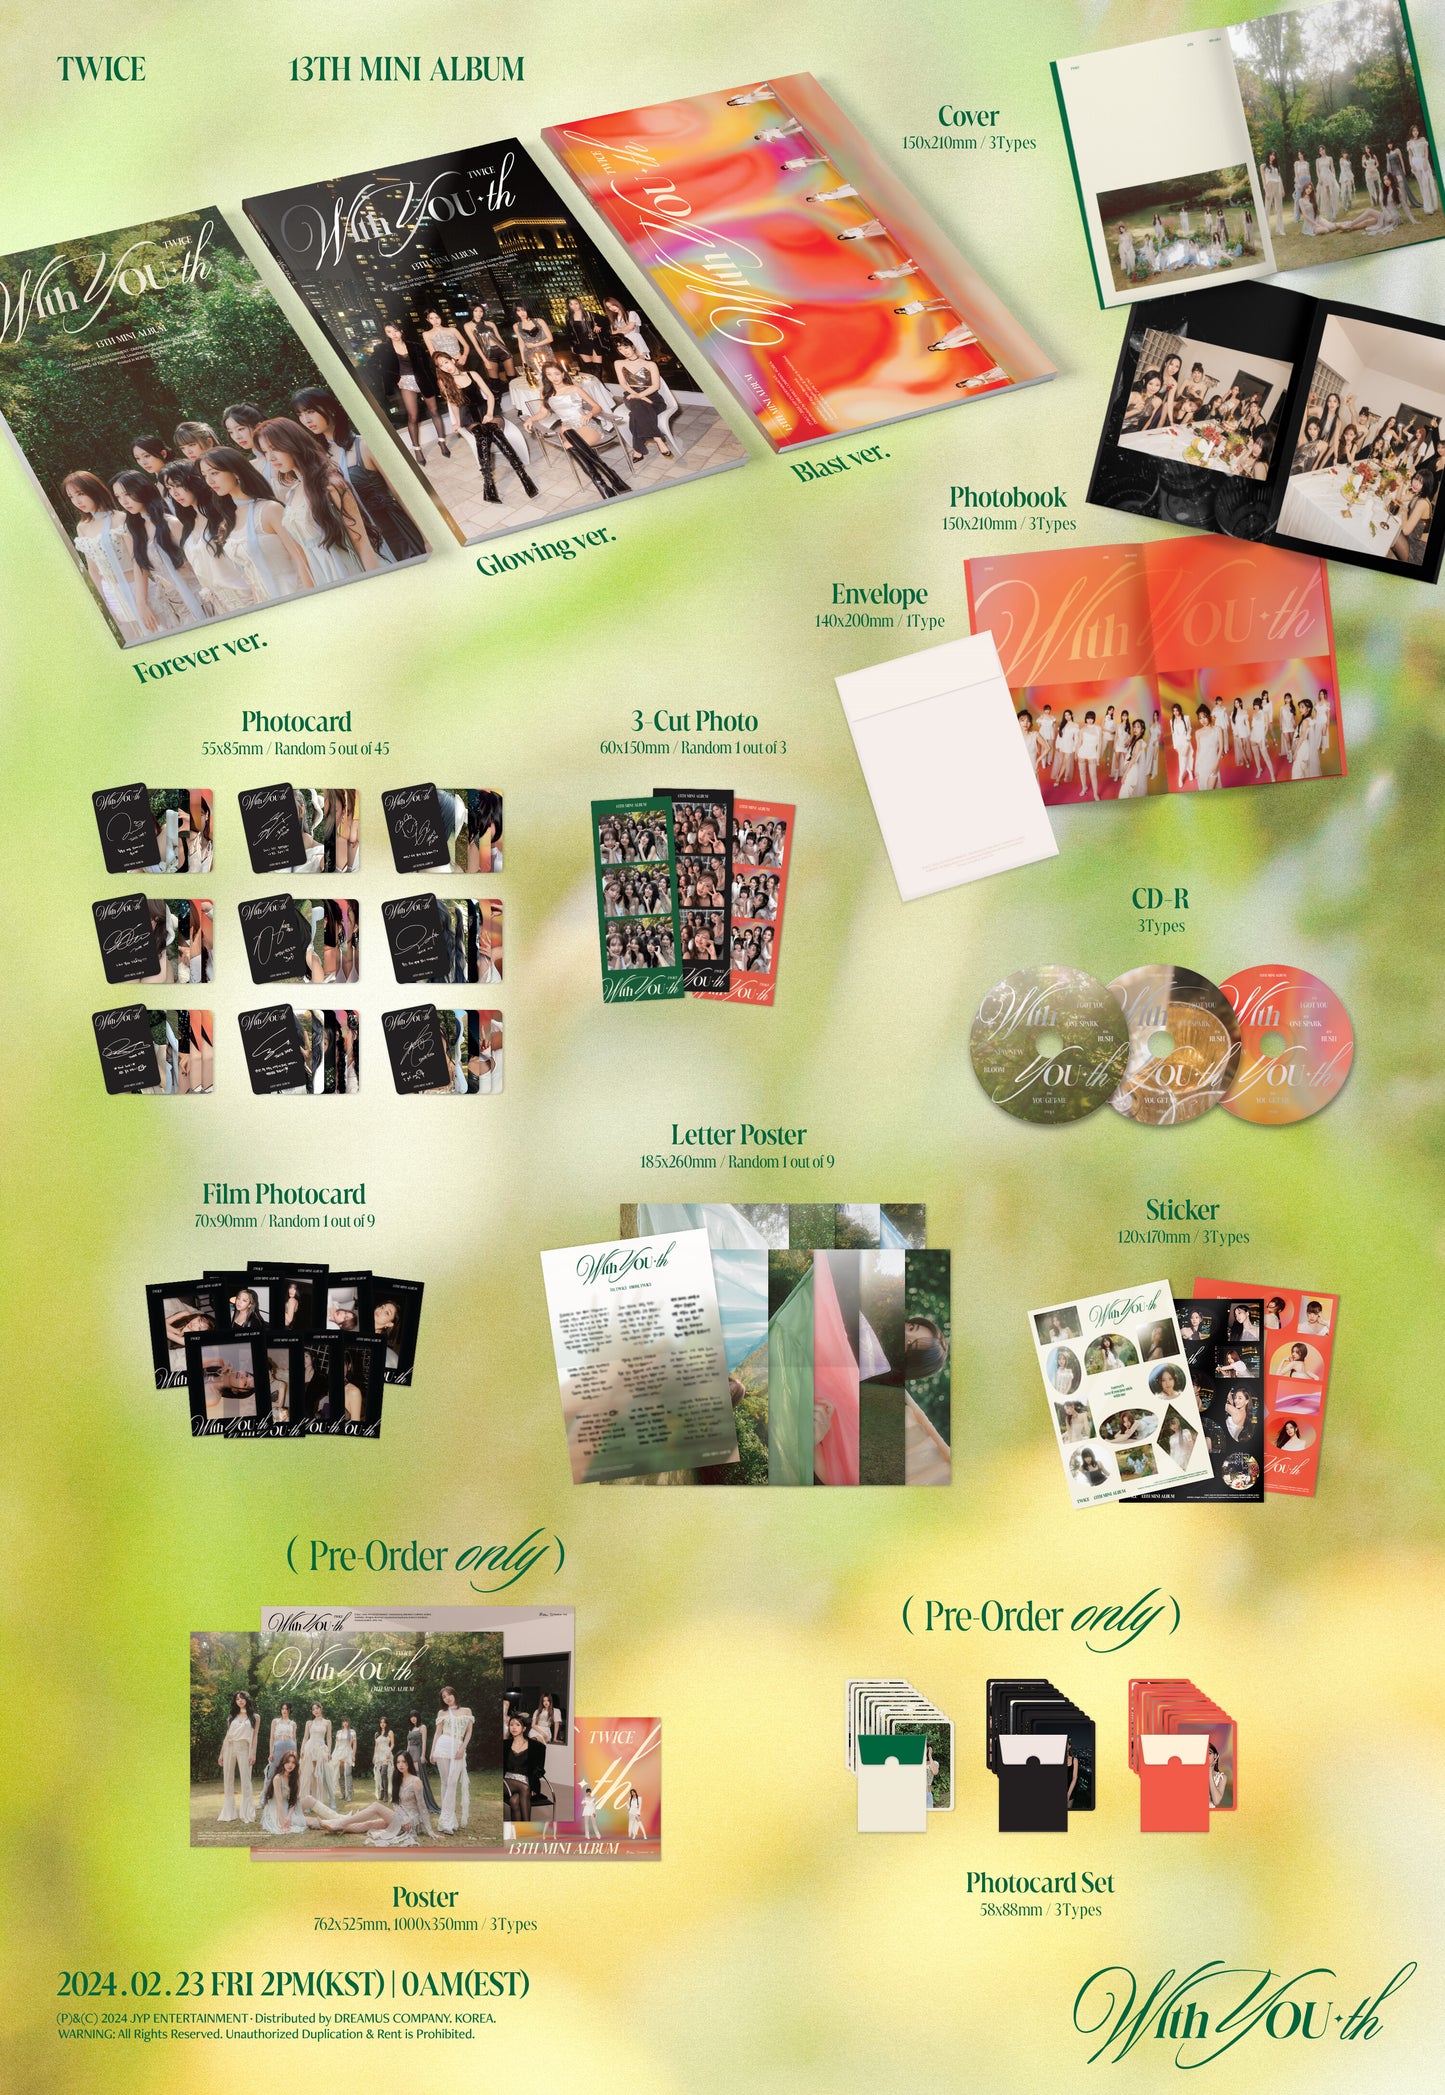 K-Pop CD Twice - 13th Mini Album 'With YOU-th'